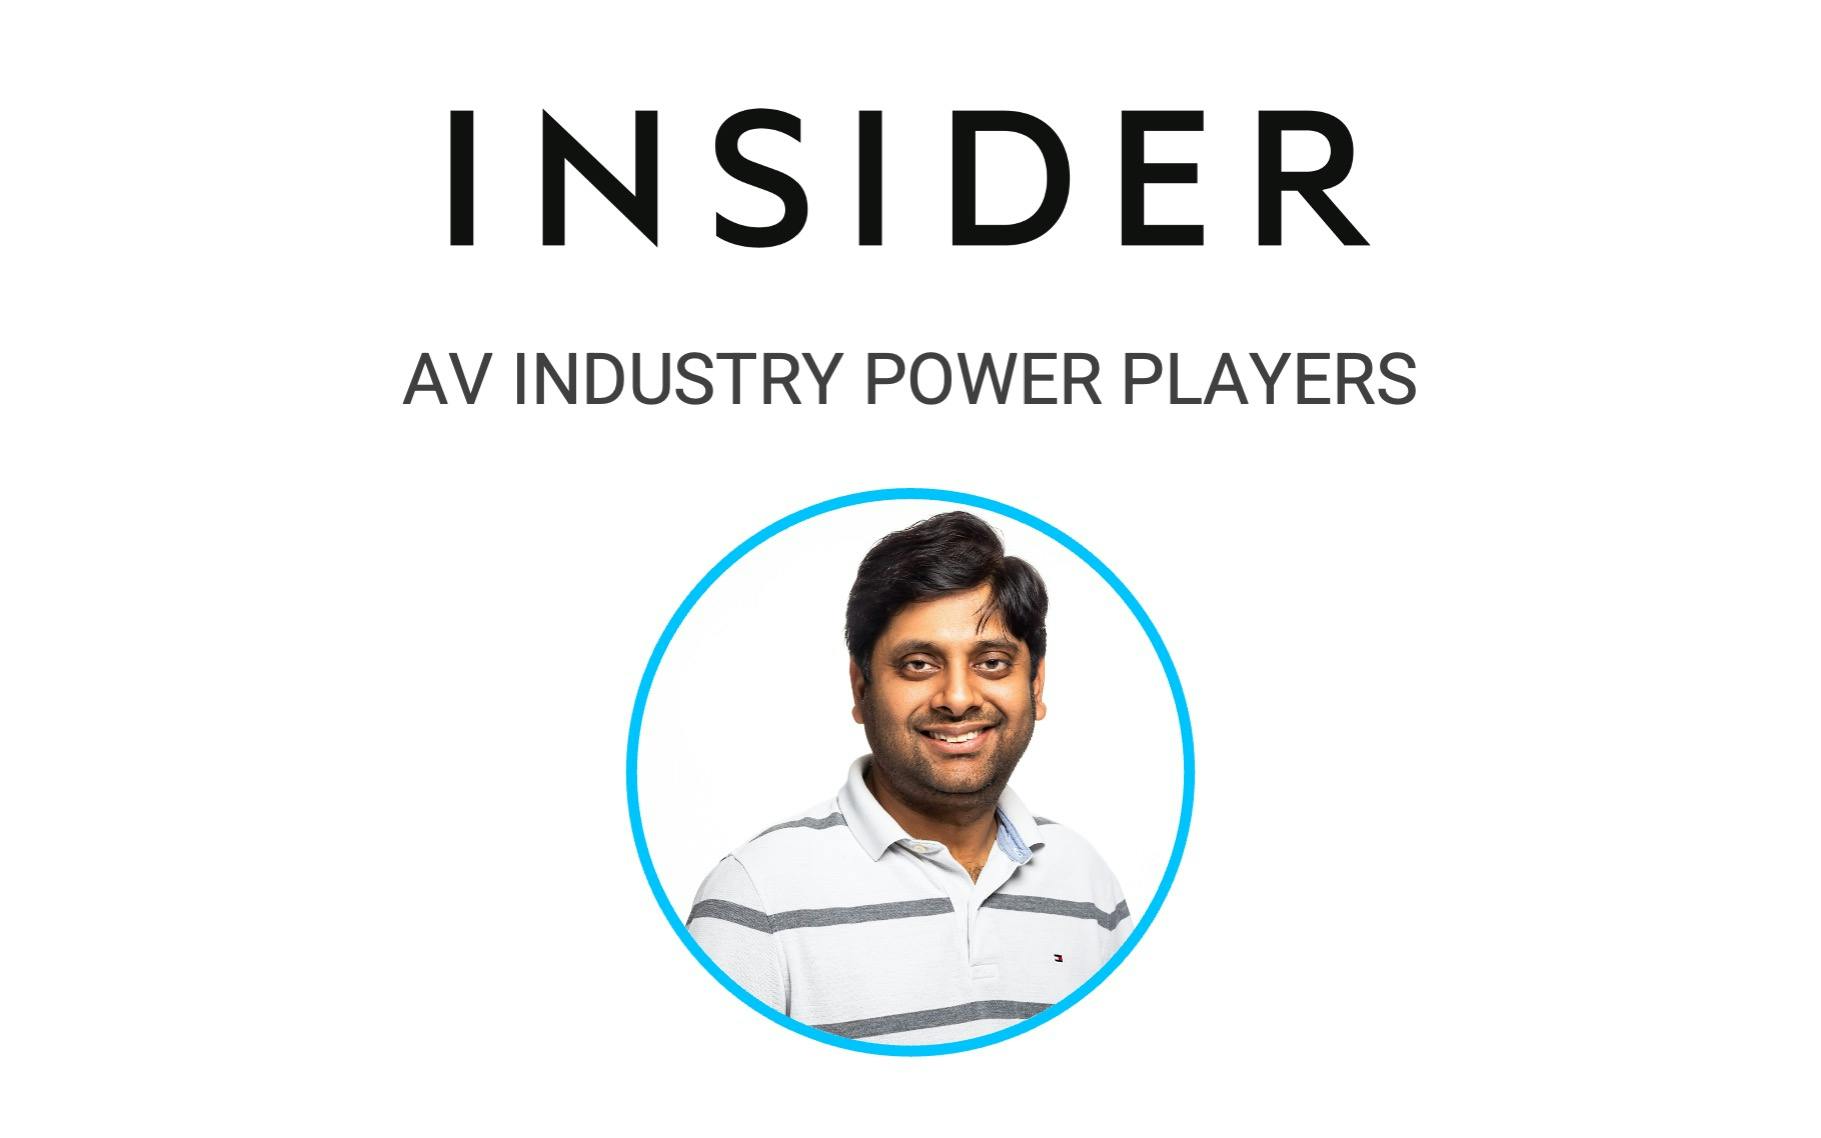 Insider AV Industry Power Players